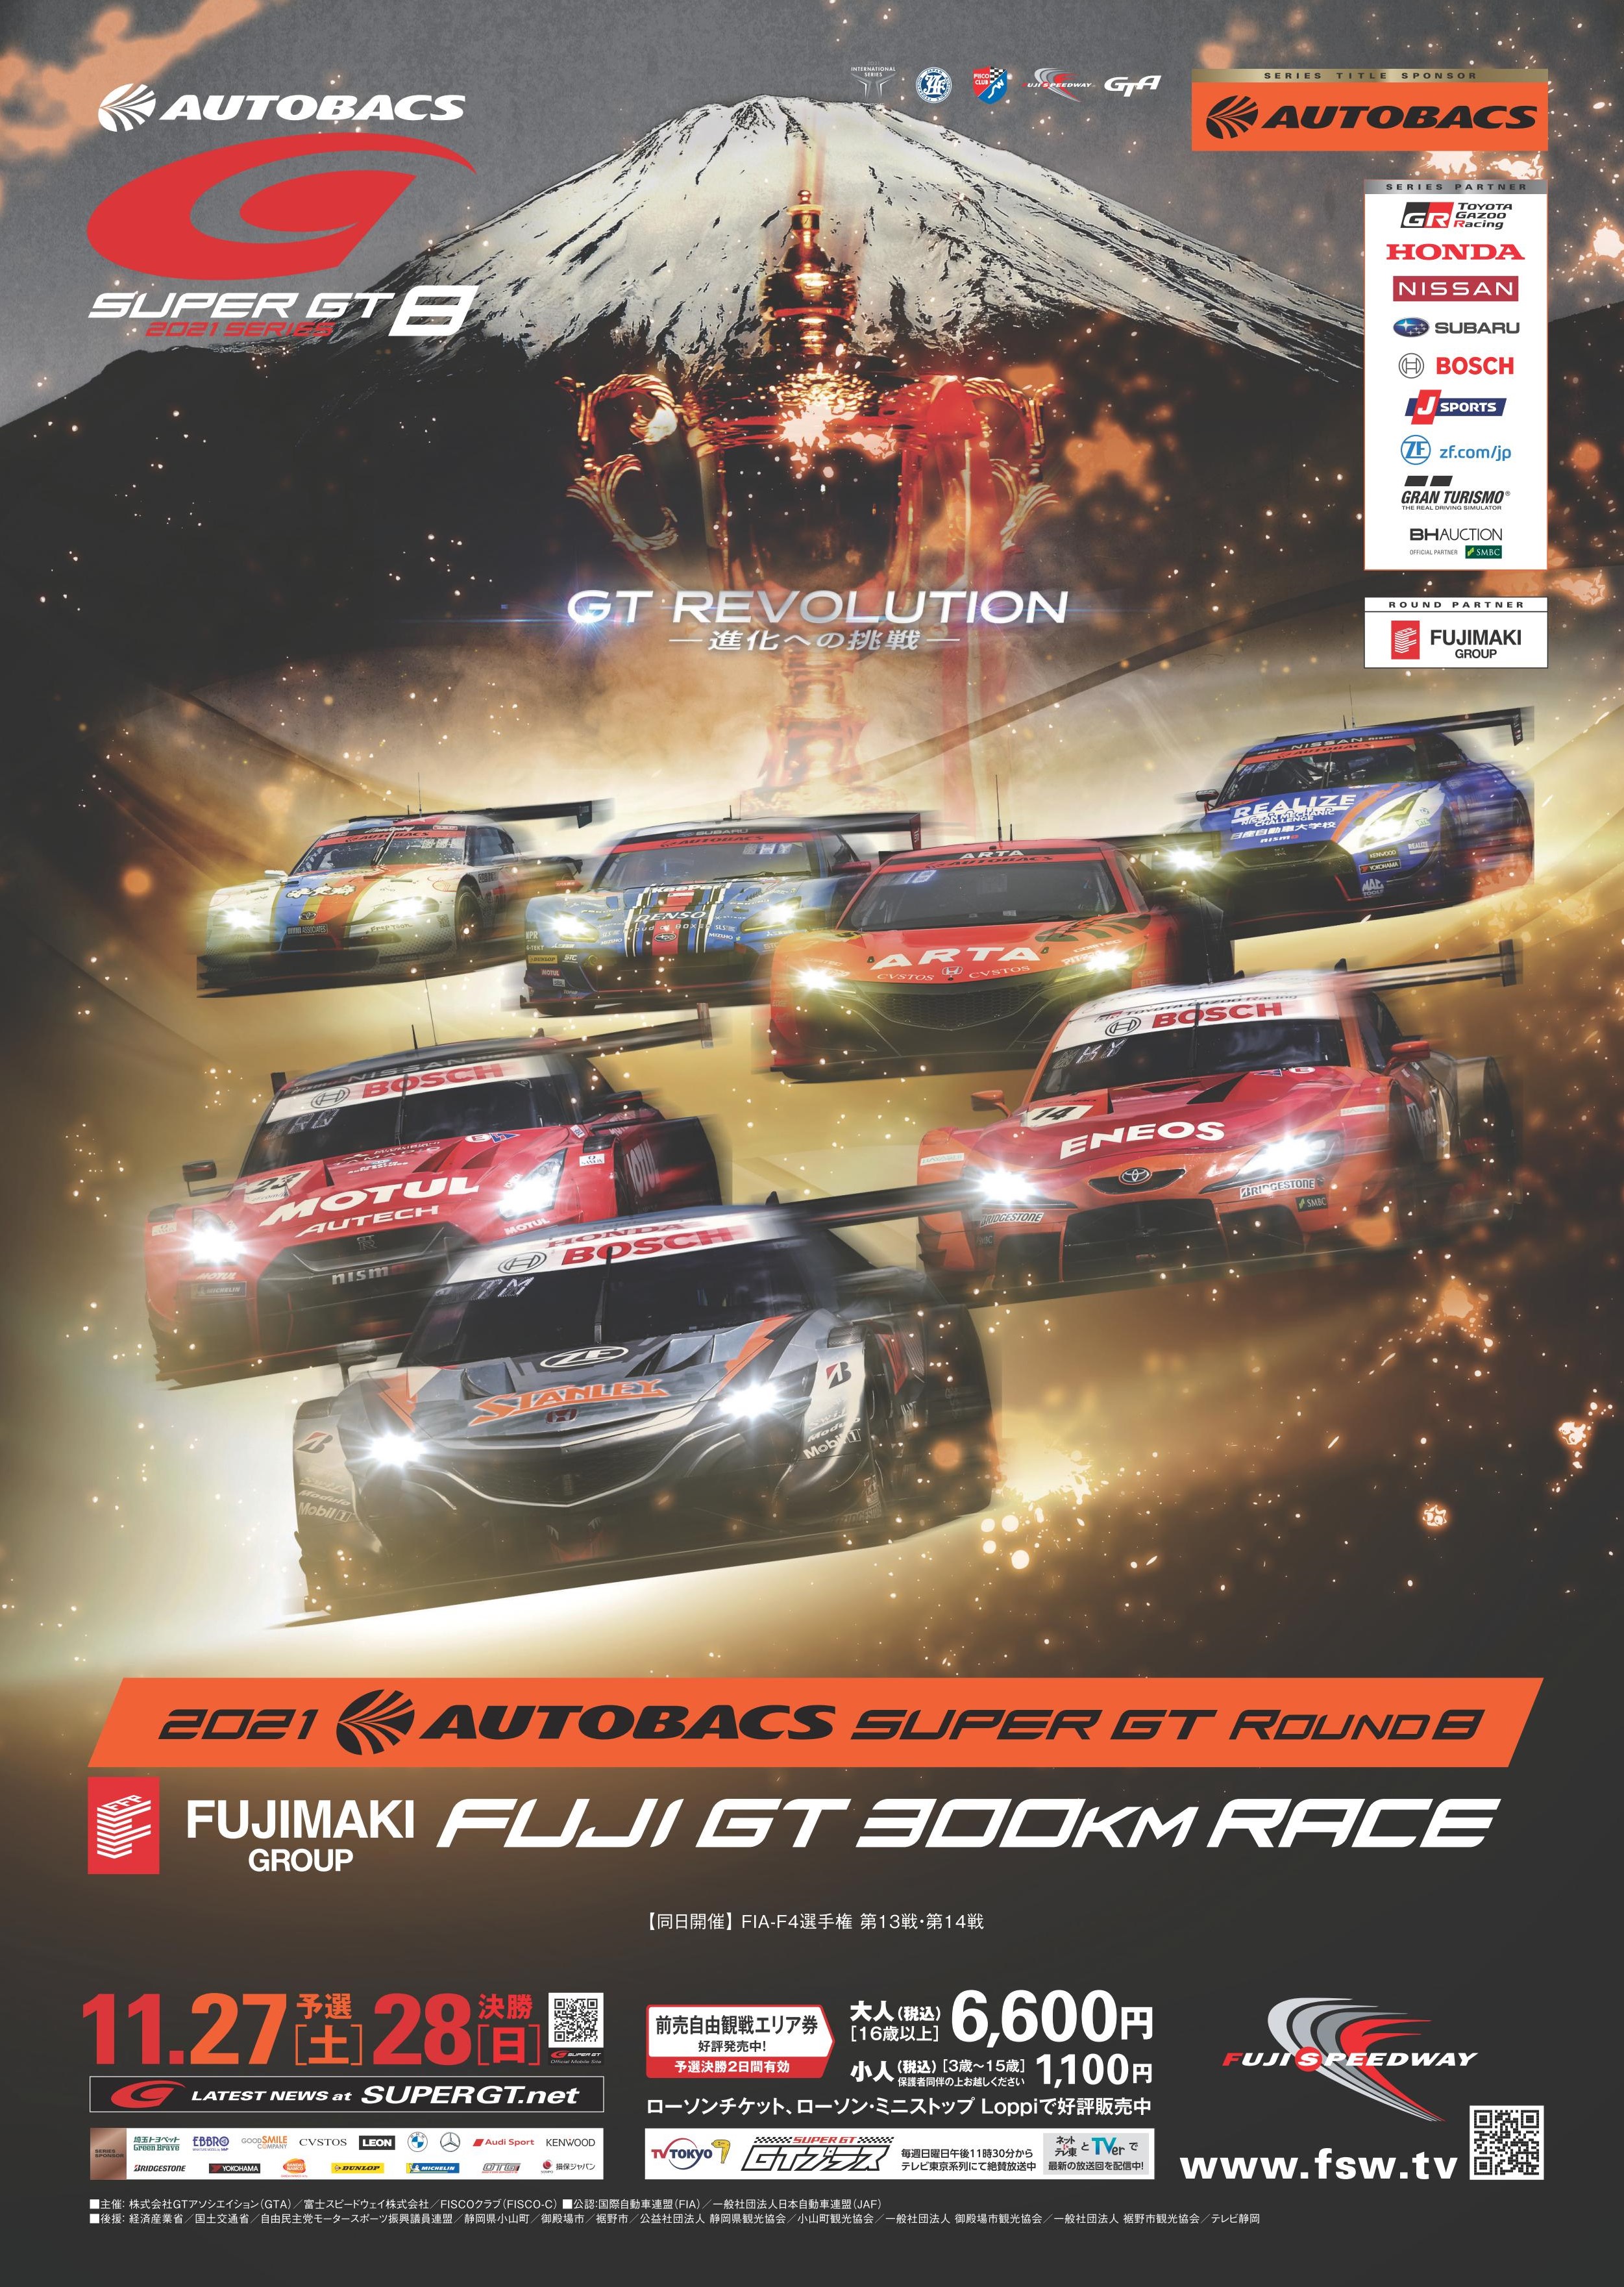 21 Autobacs Super Gt Round 8 Fujimaki Group Fuji Gt300km Race 各種チケット10月14日 木 午前10時より販売開始 富士スピードウェイ株式会社のプレスリリース